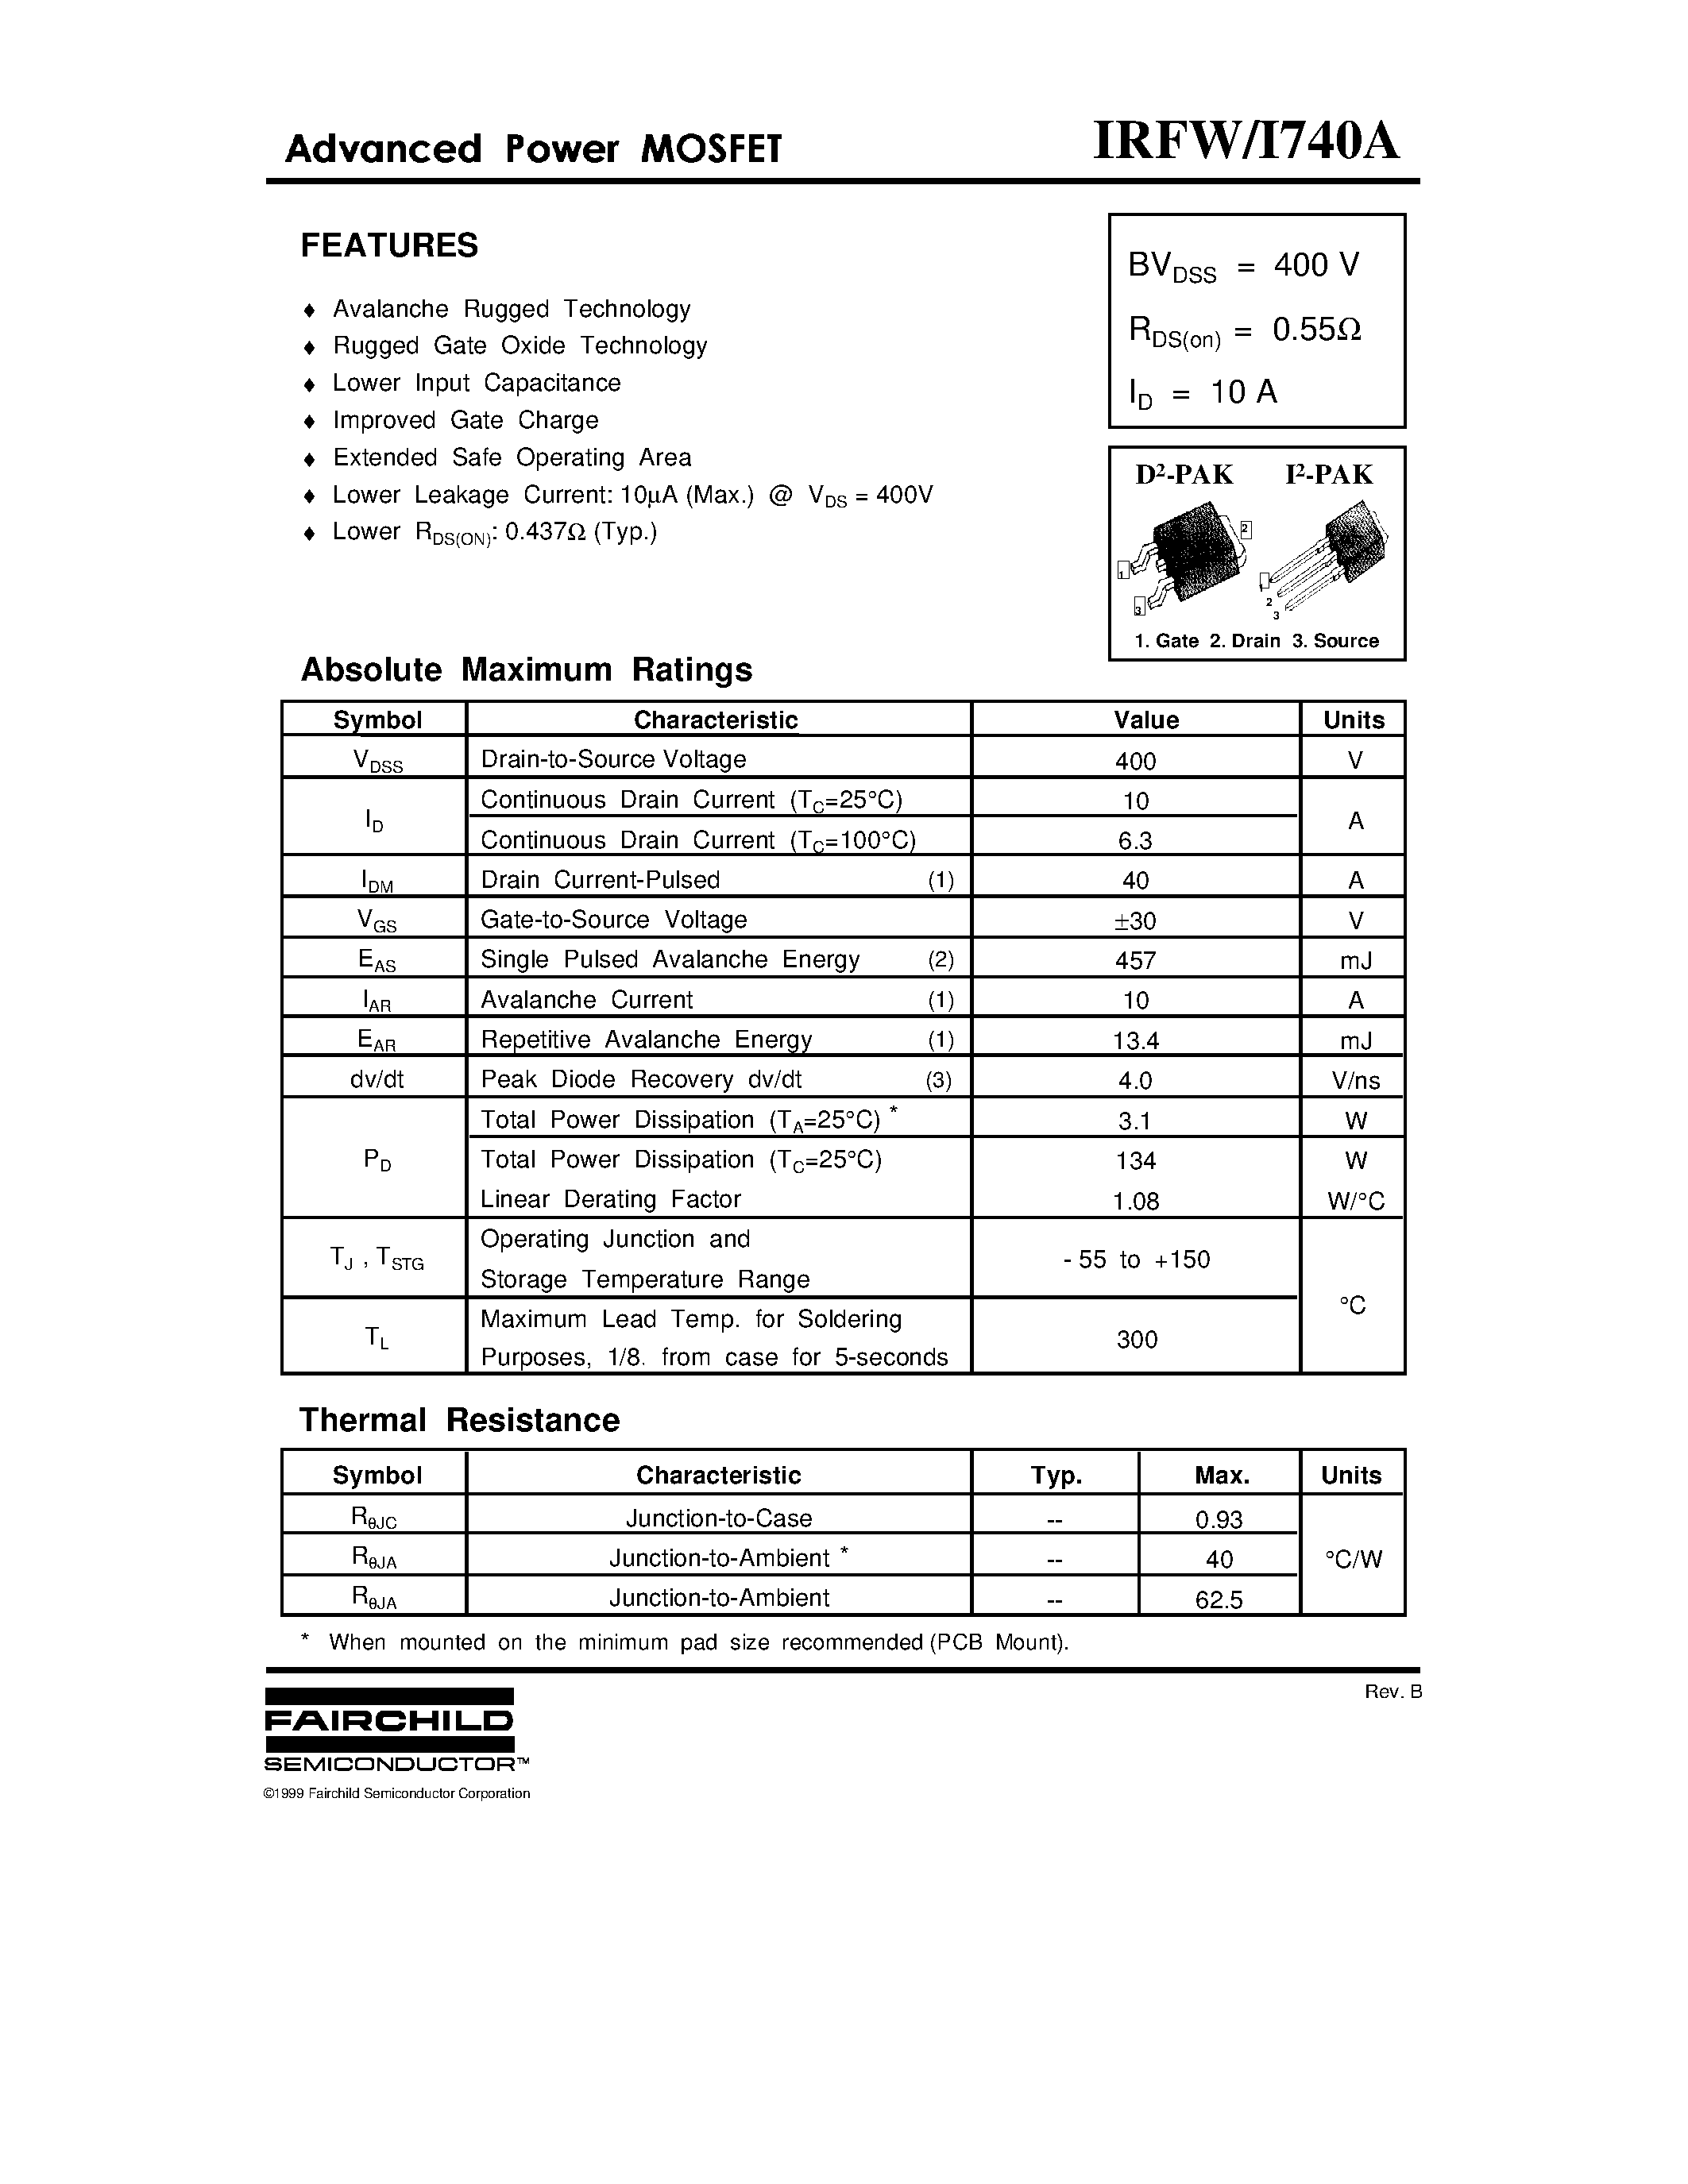 Datasheet IRFI740A - Advanced Power MOSFET page 1